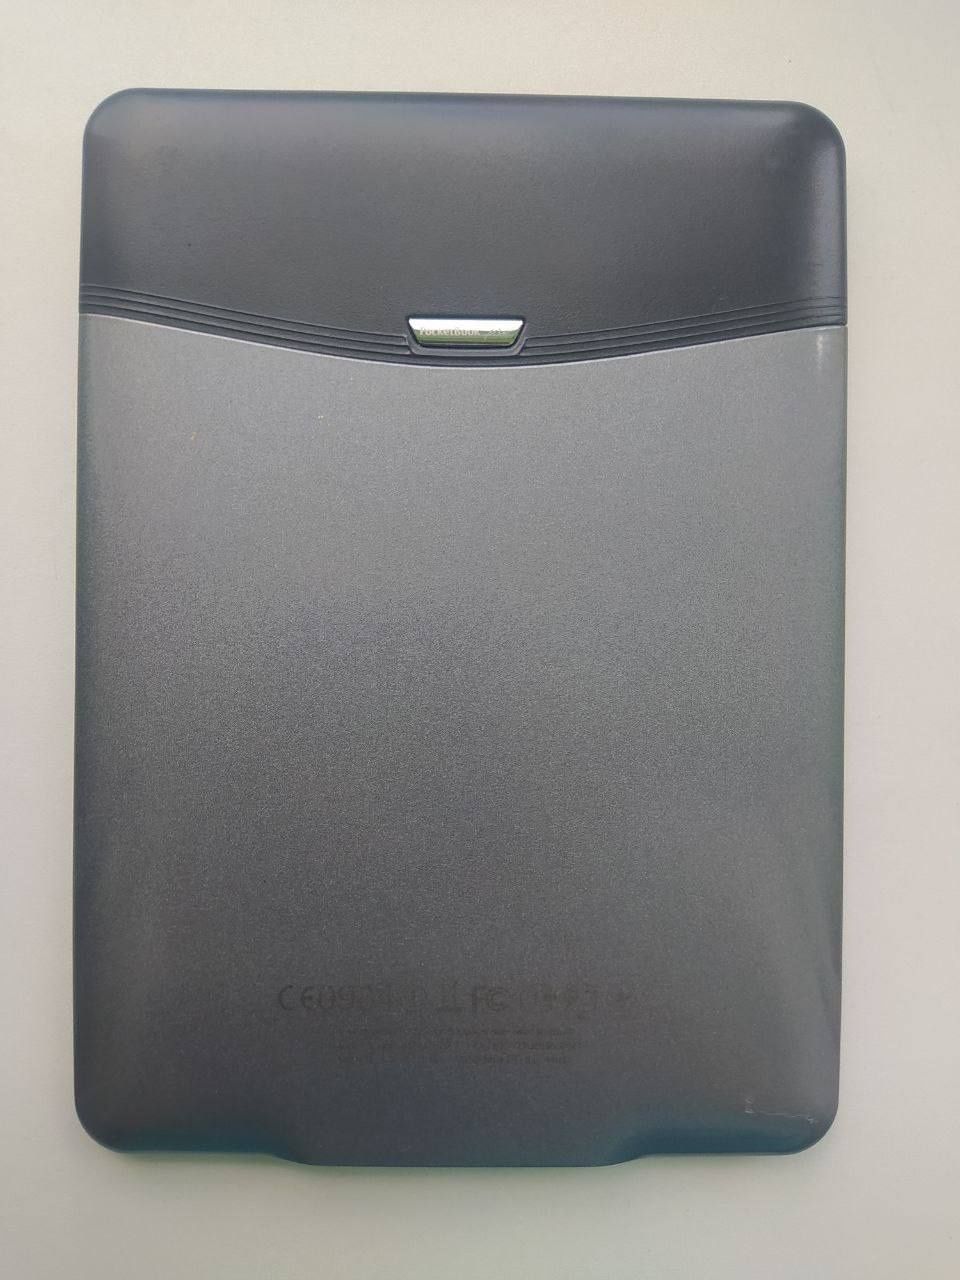 Електронна книга Pocket Book 602 Pro Wi-fi Bluetooth читалка рідер